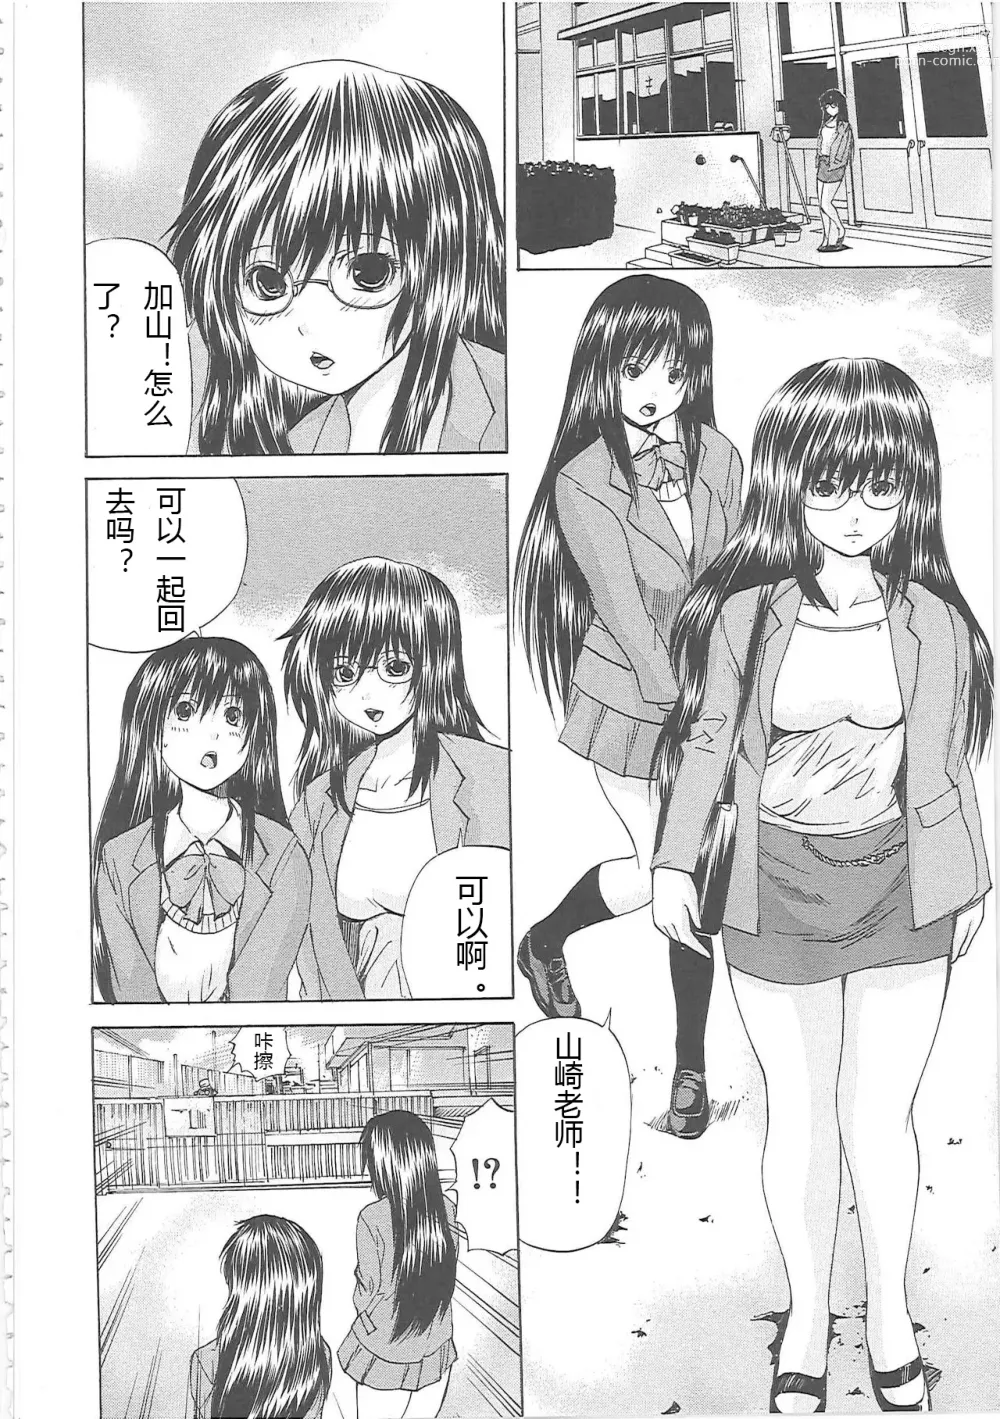 Page 7 of manga Bakkinkei